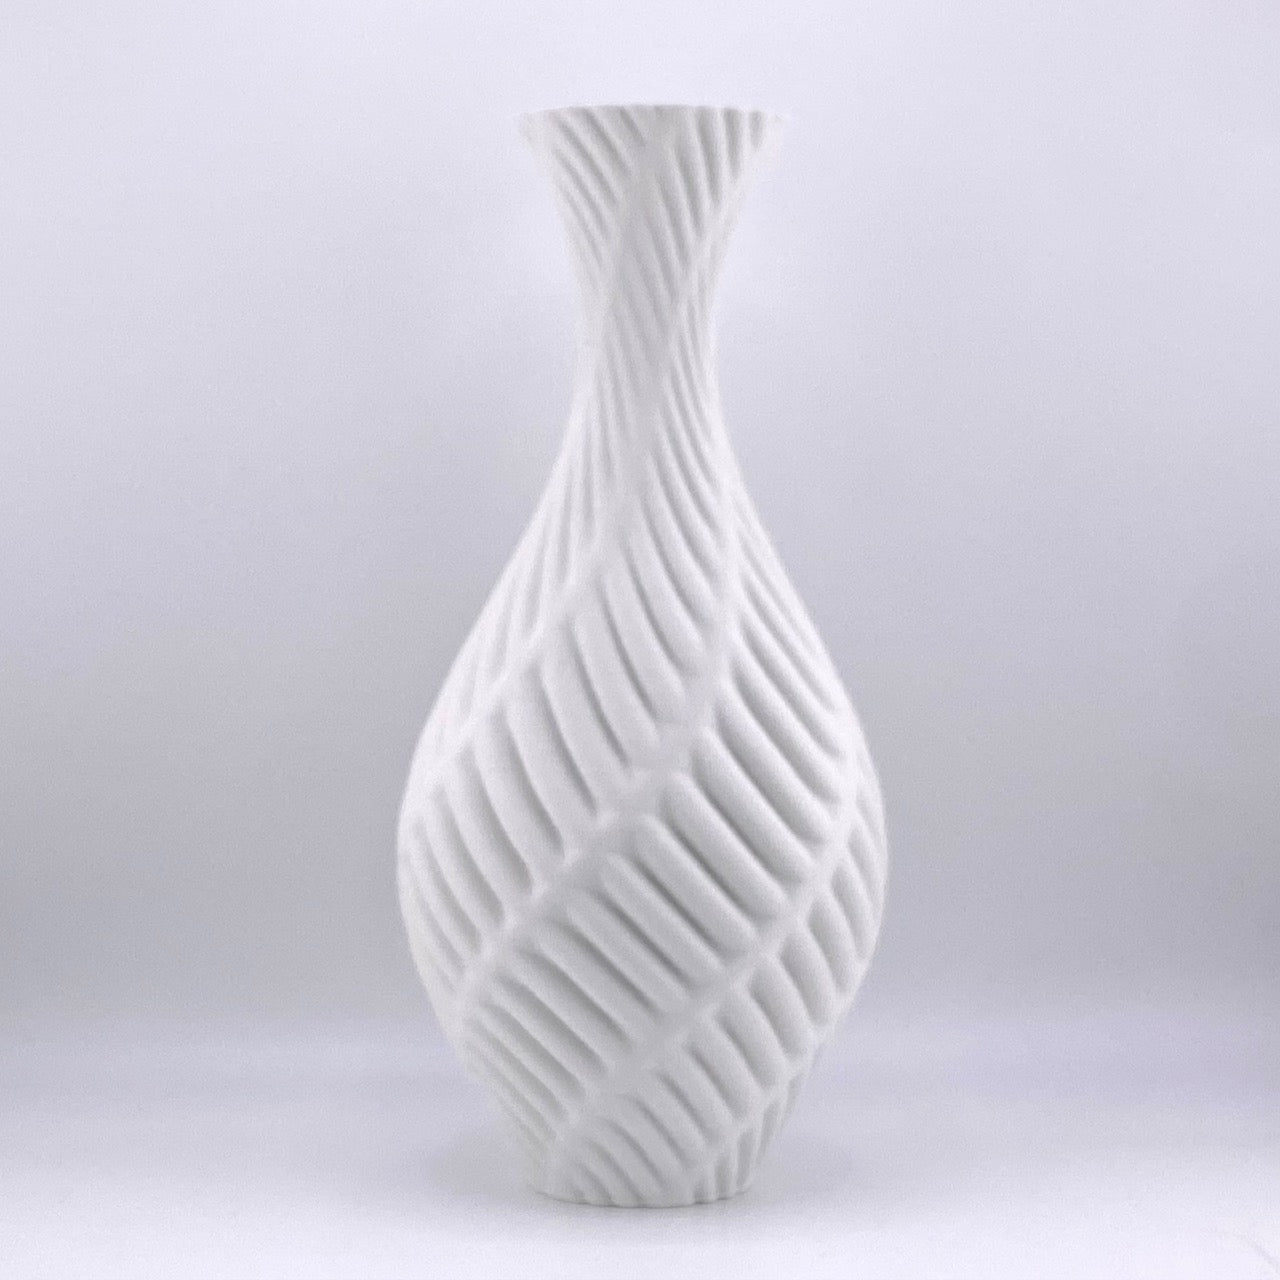 Fern 3D printed in Broken White filament